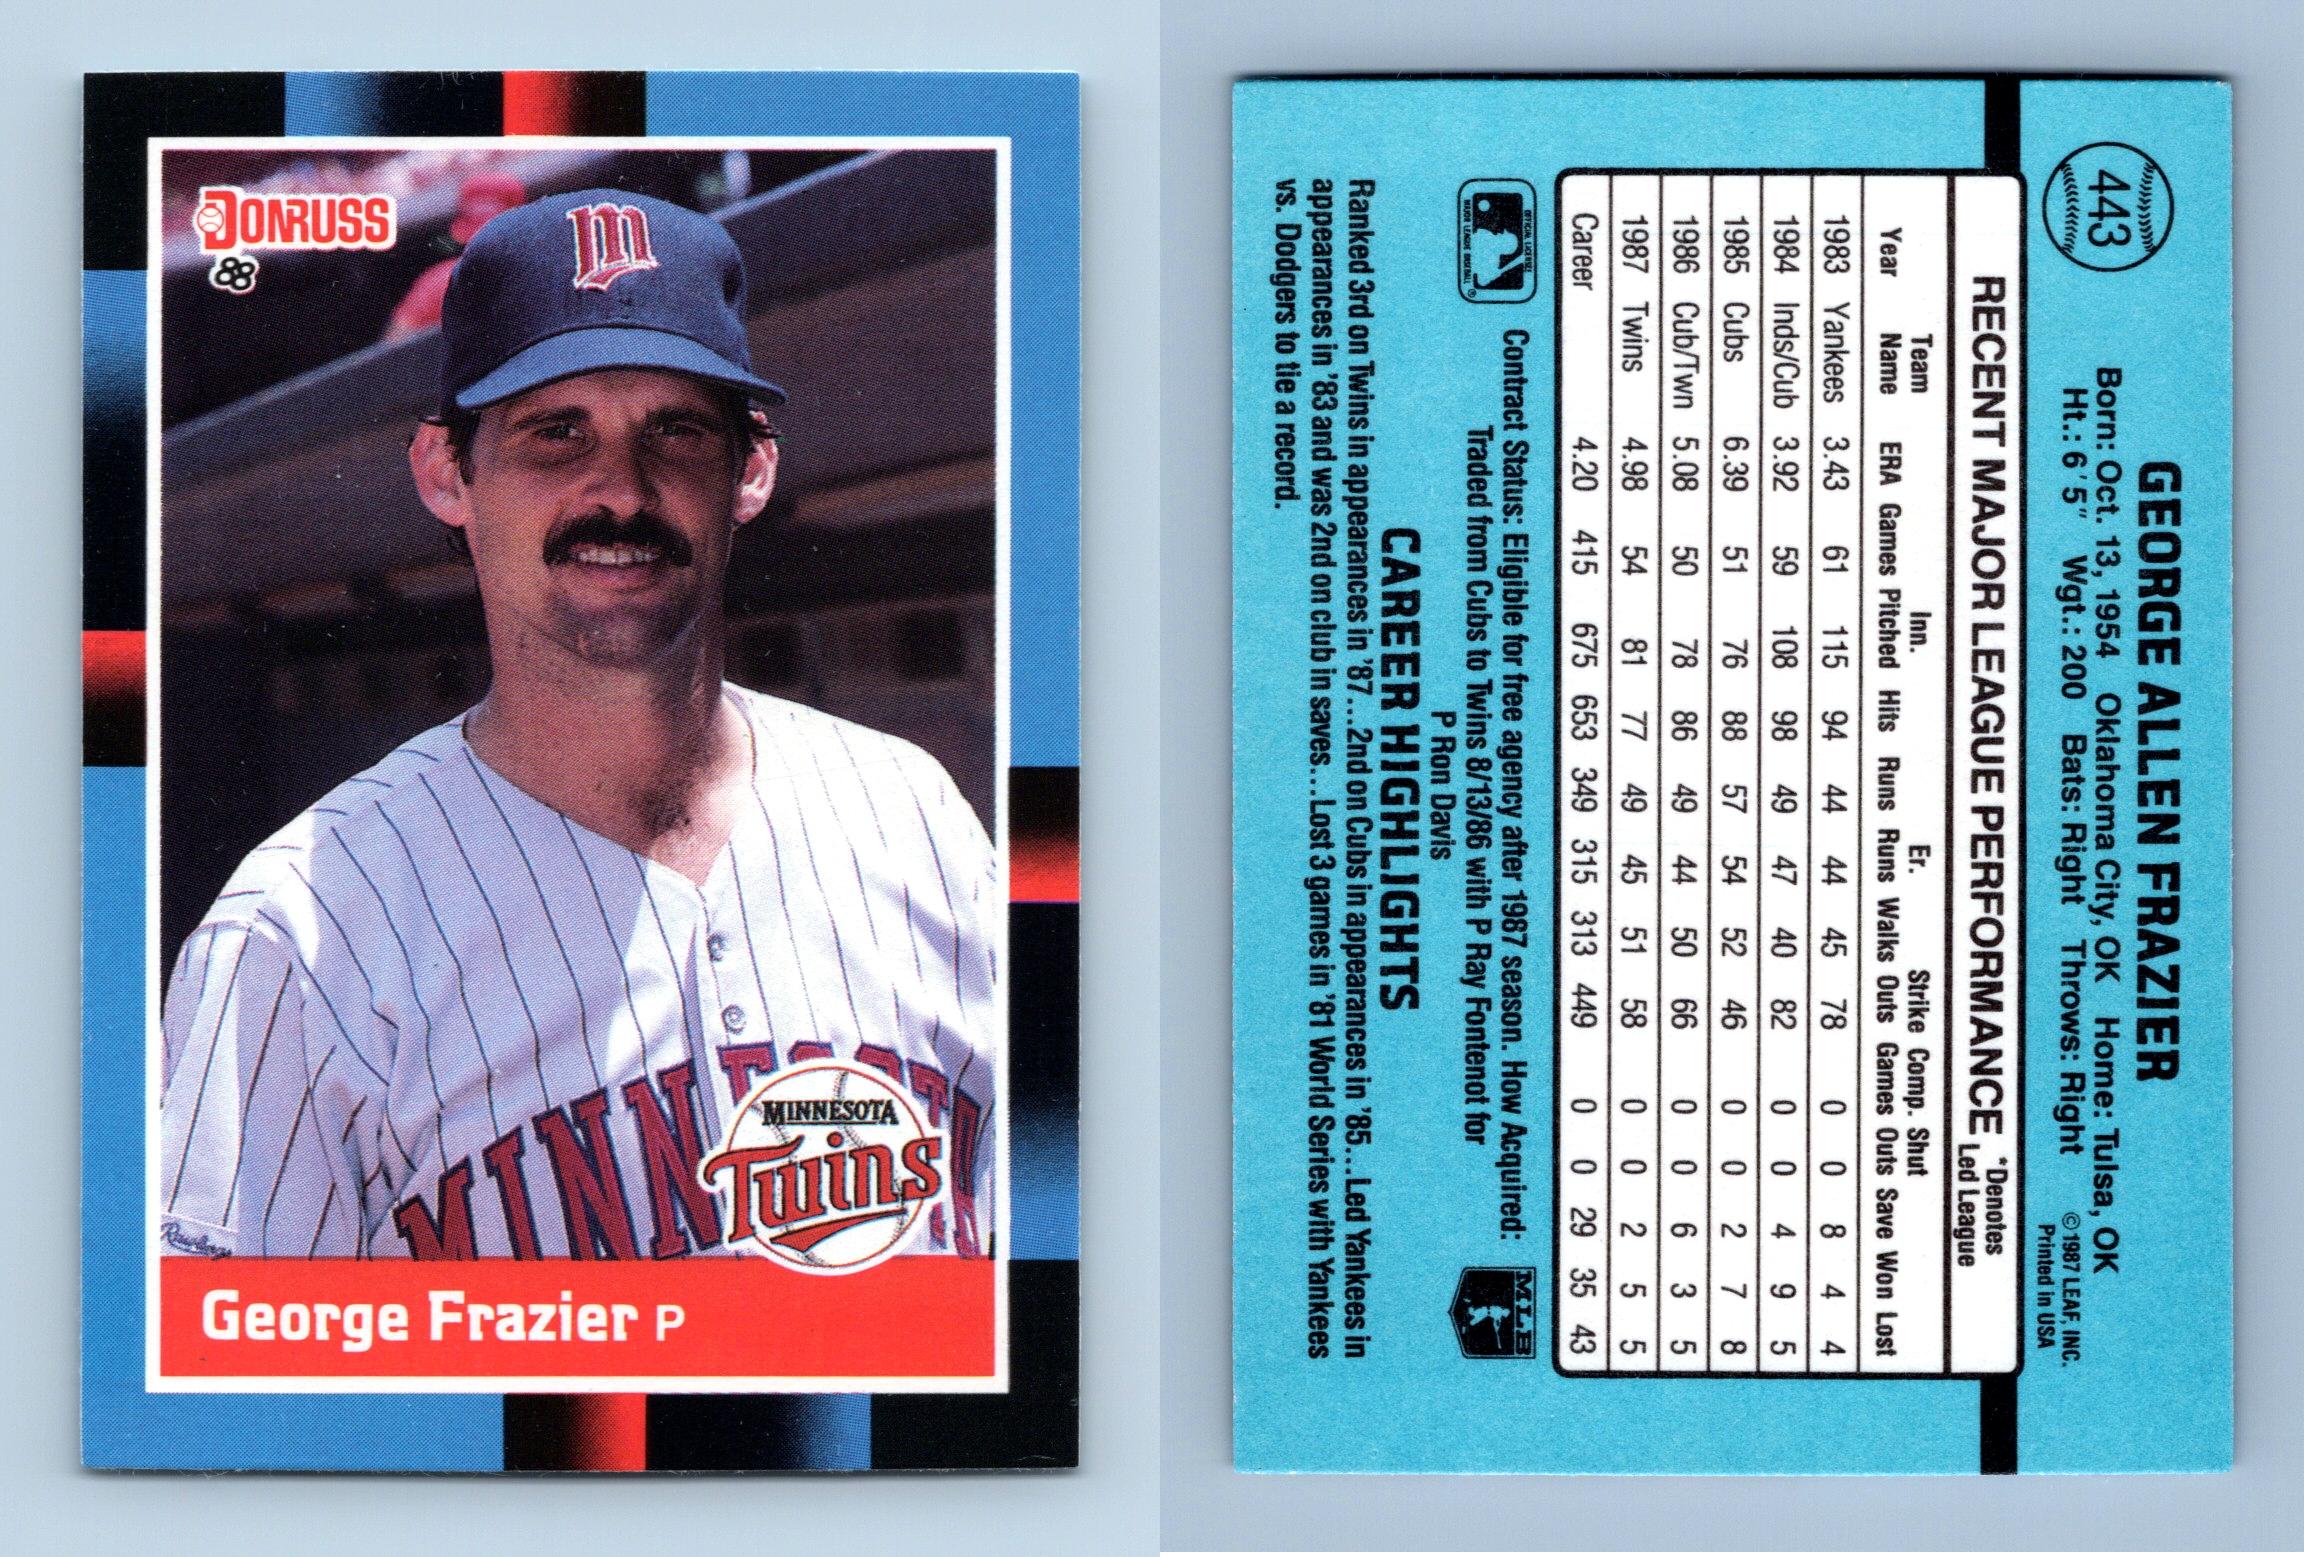 1988 Donruss Baseball SP Checklist - The Radicards® Blog